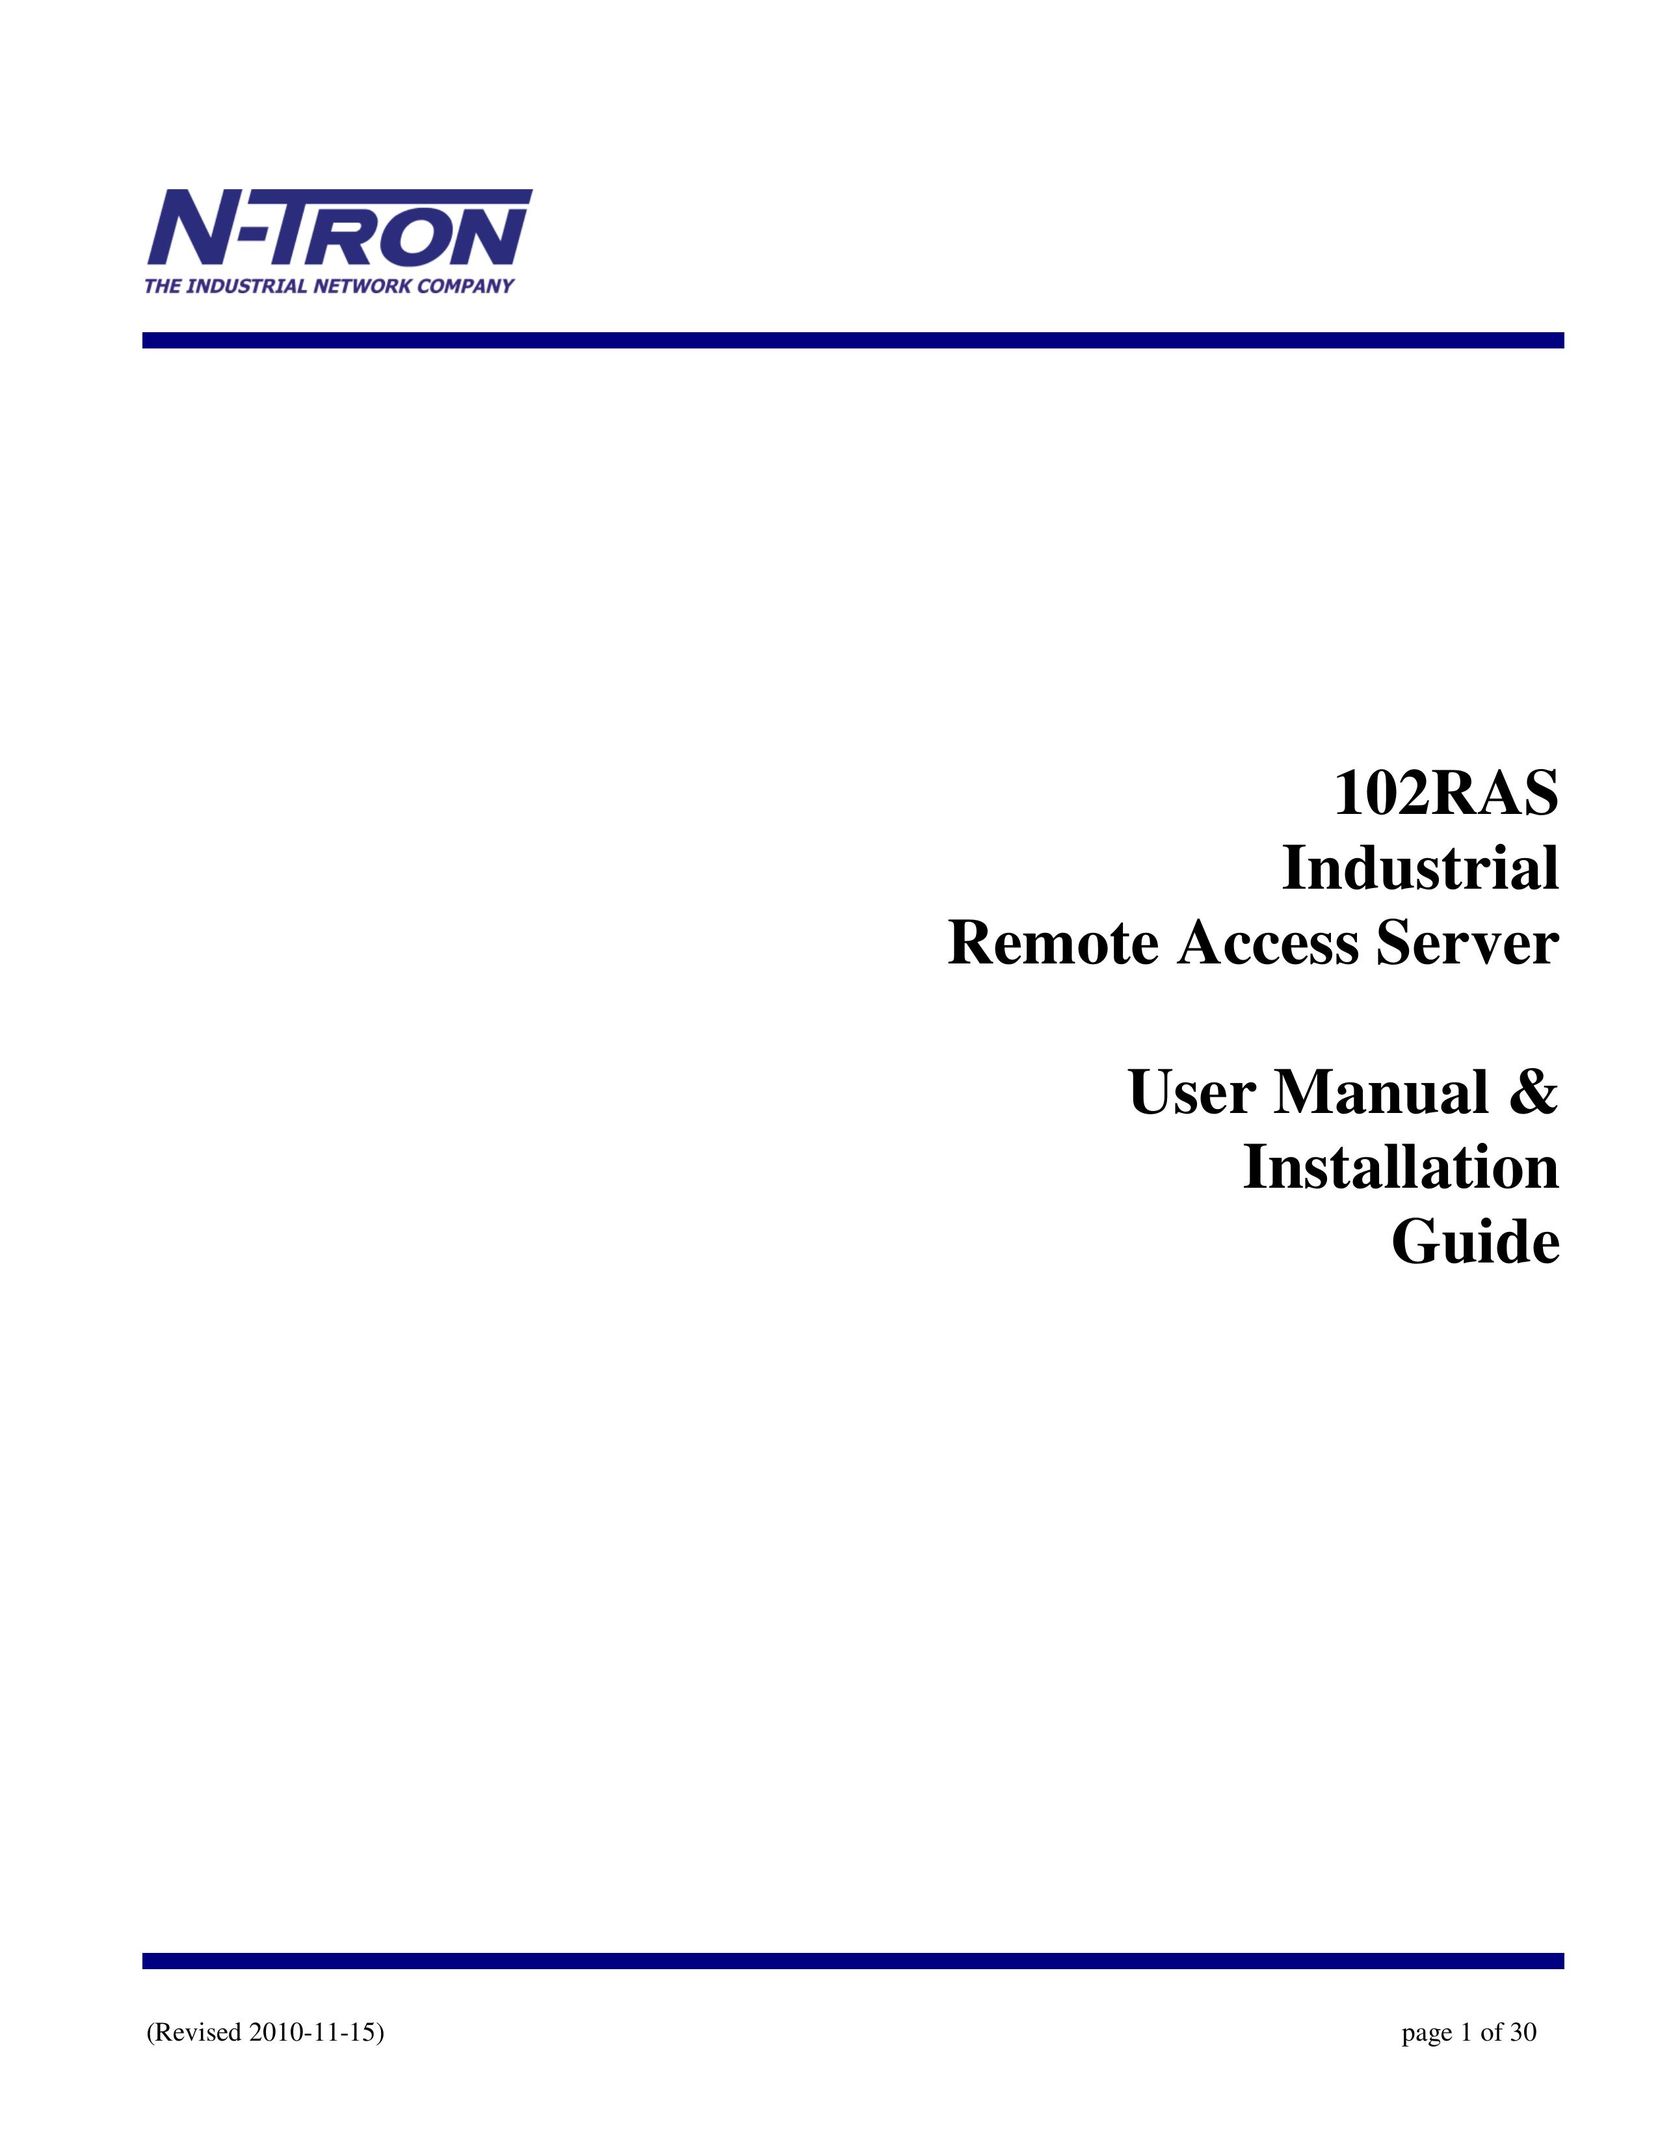 N-Tron 102RAS Server User Manual